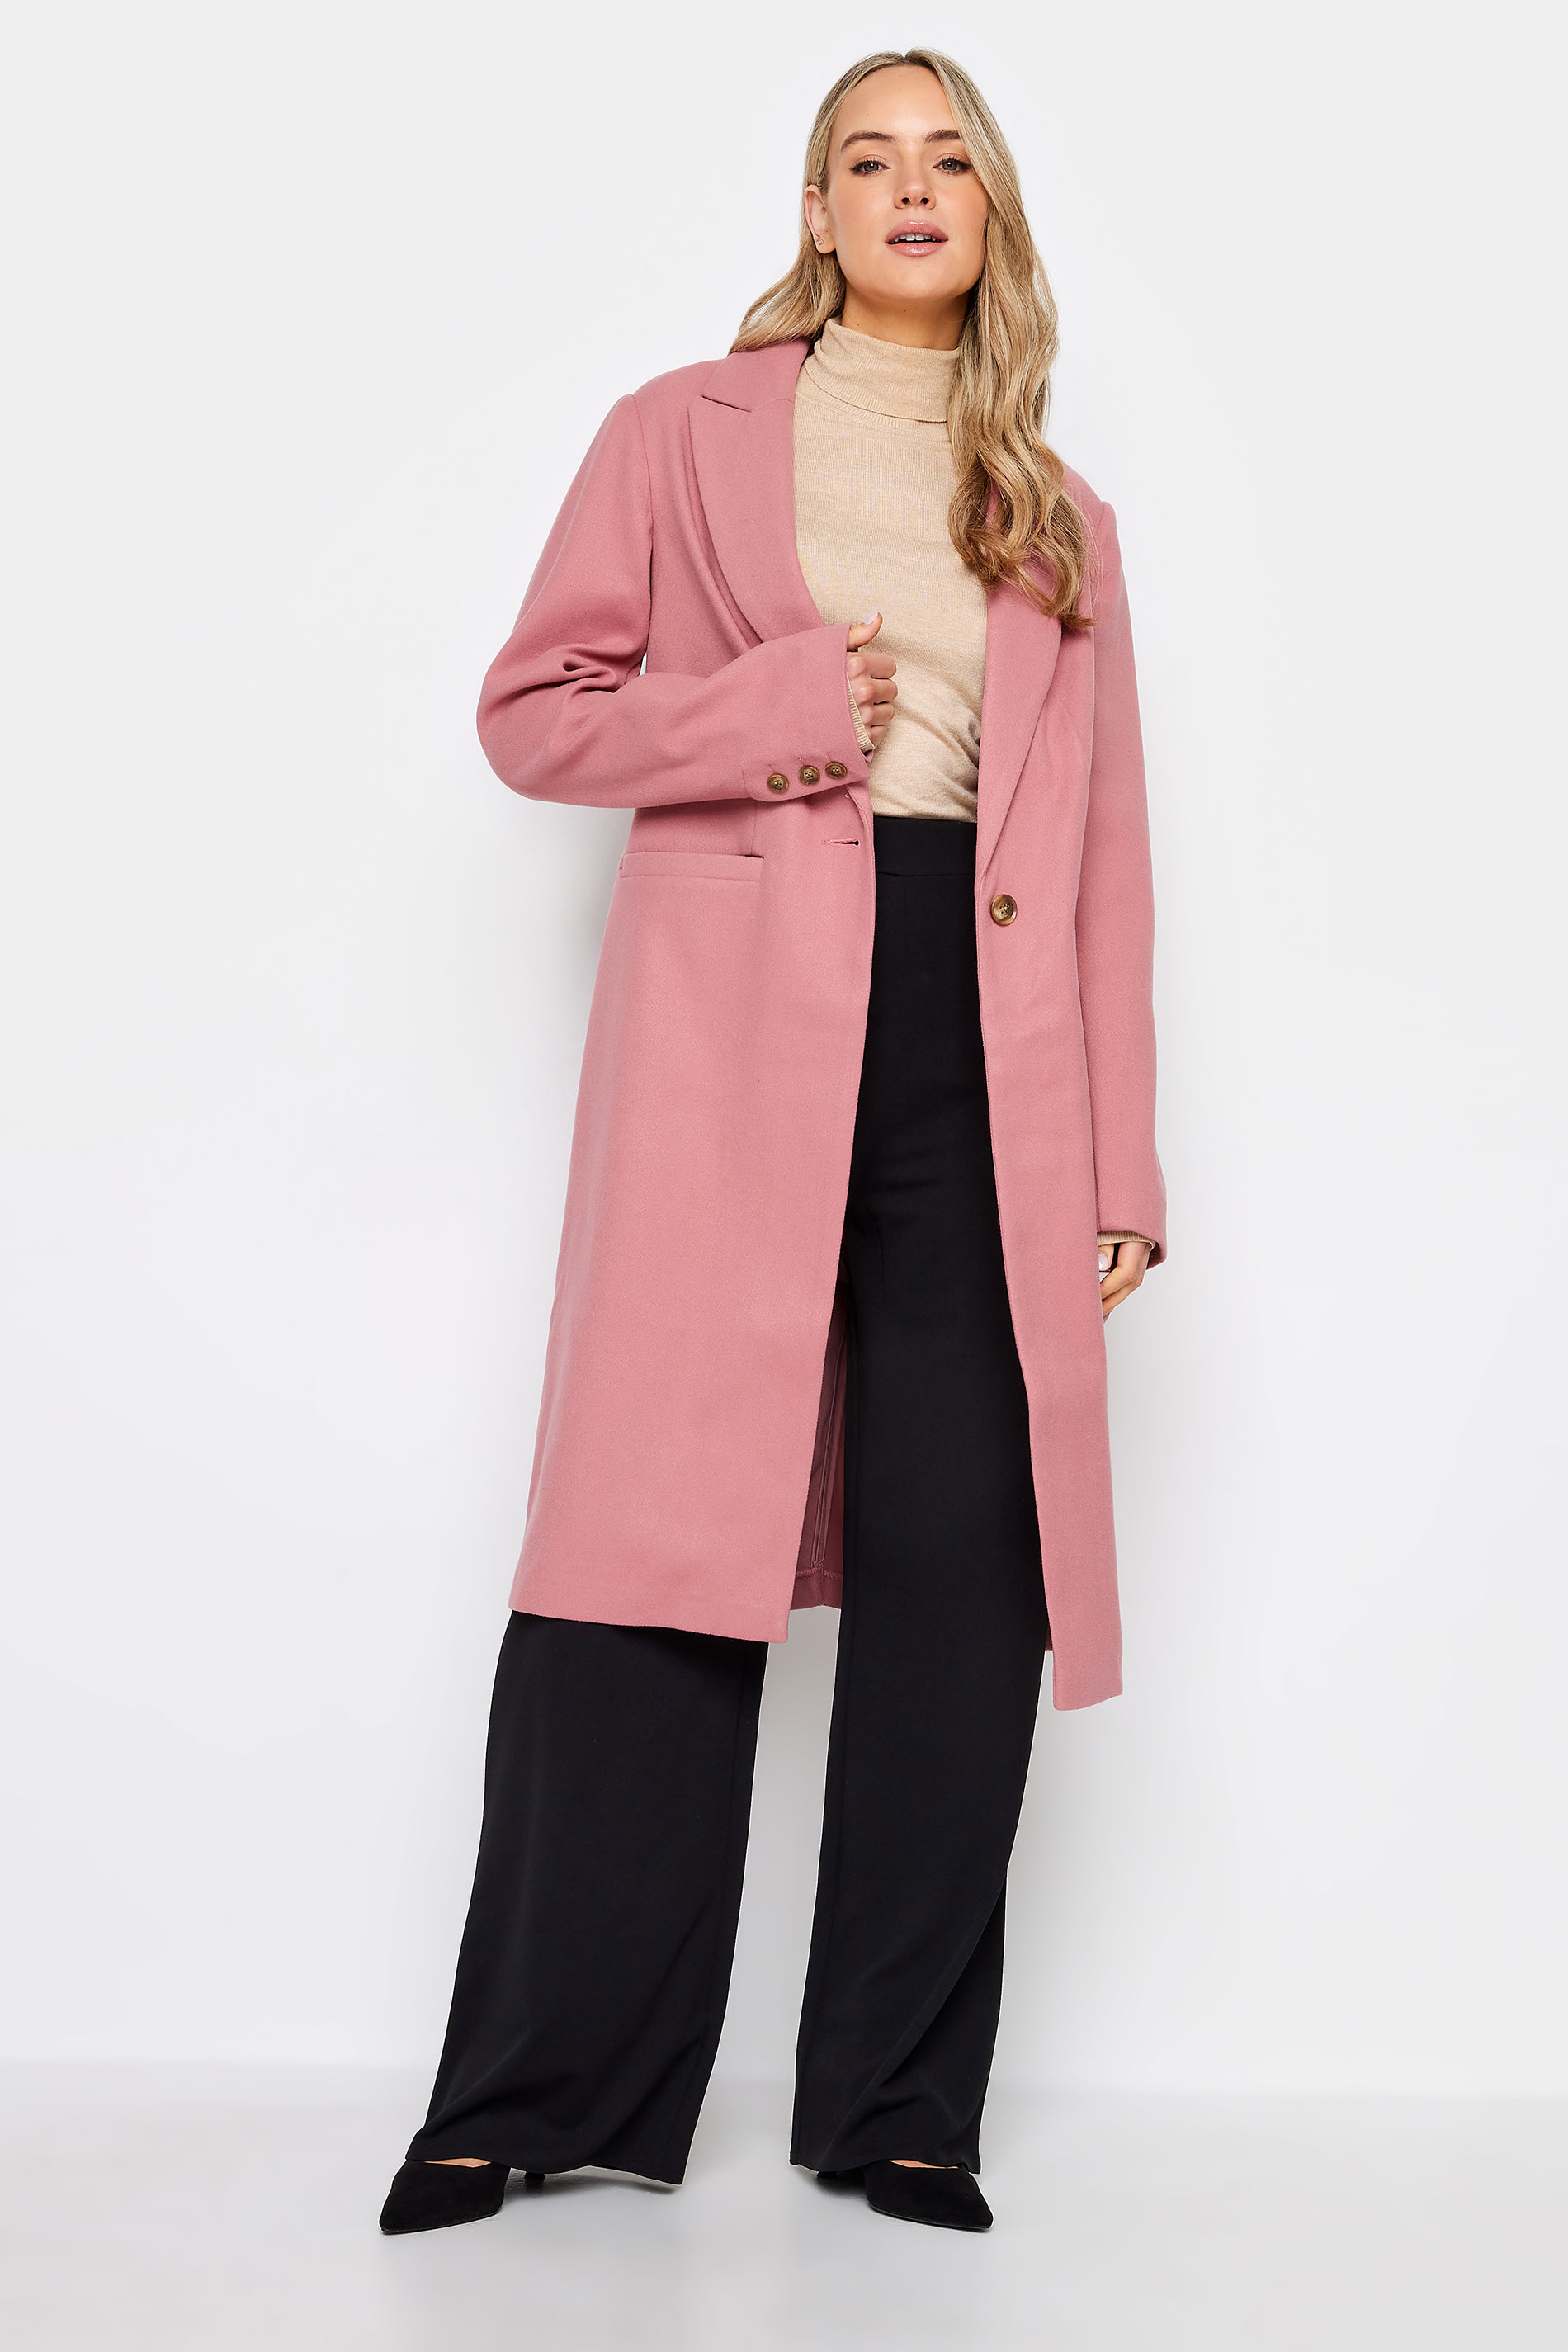 LTS Tall Women's Blush Pink Midi Formal Coat | Long Tall Sally 2